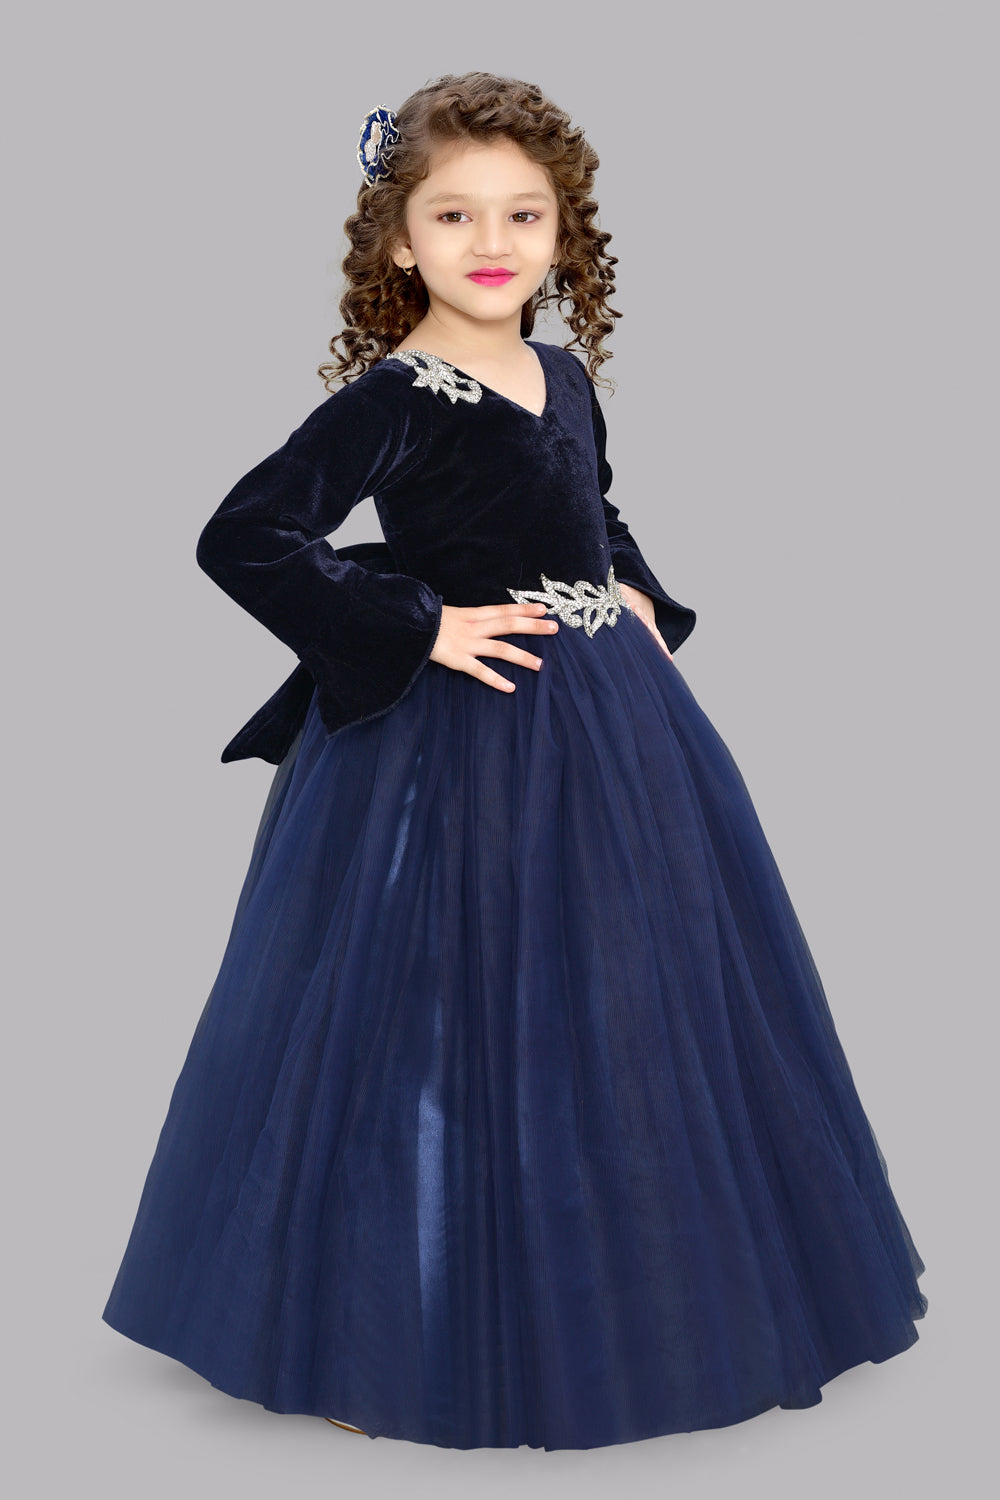 Toddler Girls Velvet Lace Princess Dress Long Sleeve Party Dress Kids  Clothes | eBay